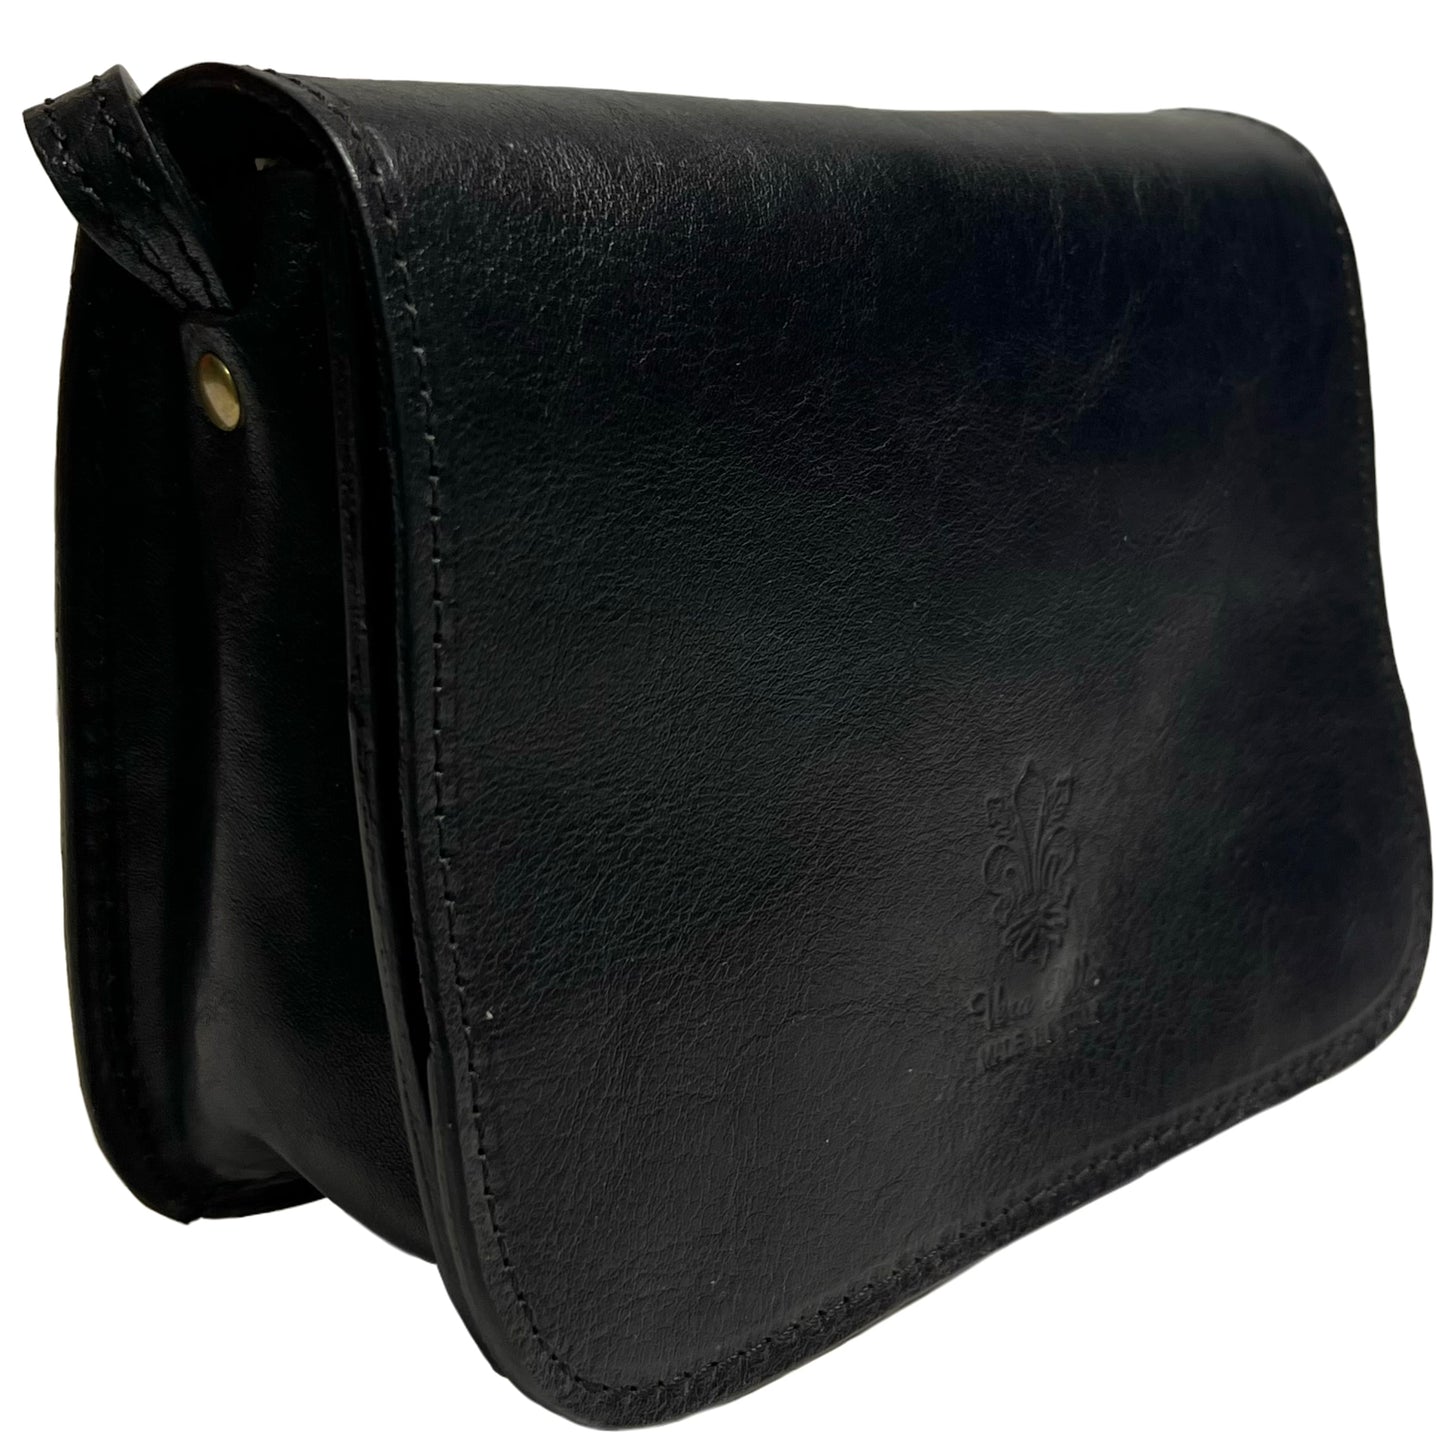 Modarno Shoulder Bag in Vegetable Tanned Leather 20 x 7 x 15 cm